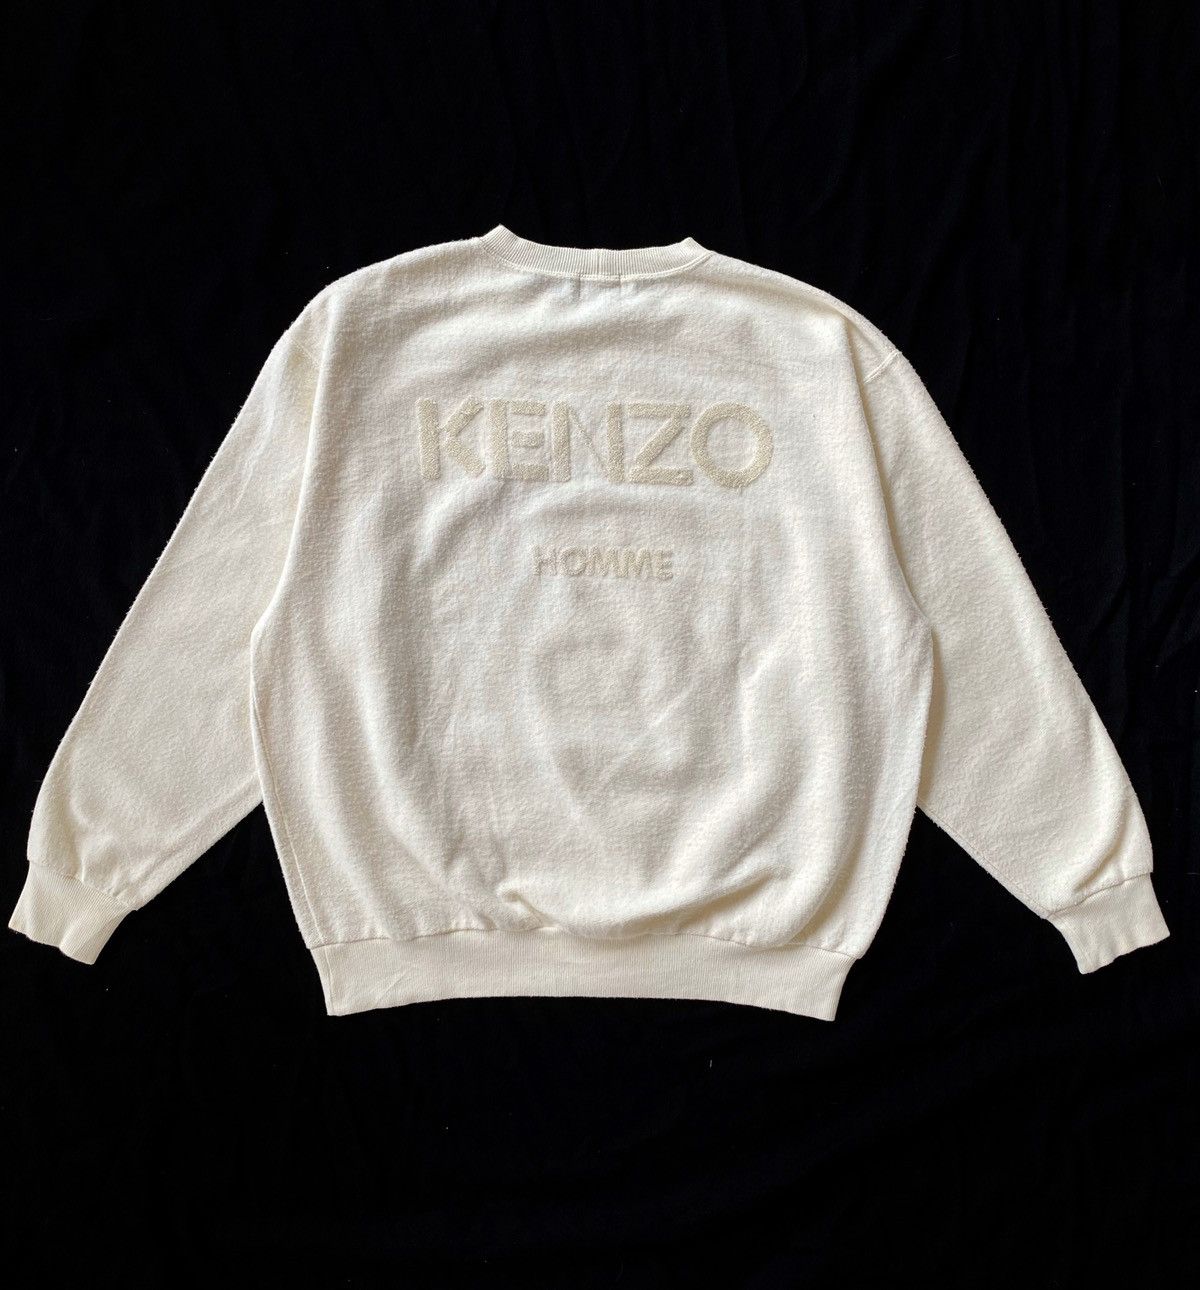 KENZO Paris Homme Designer Spellout Sweatshirt - 3